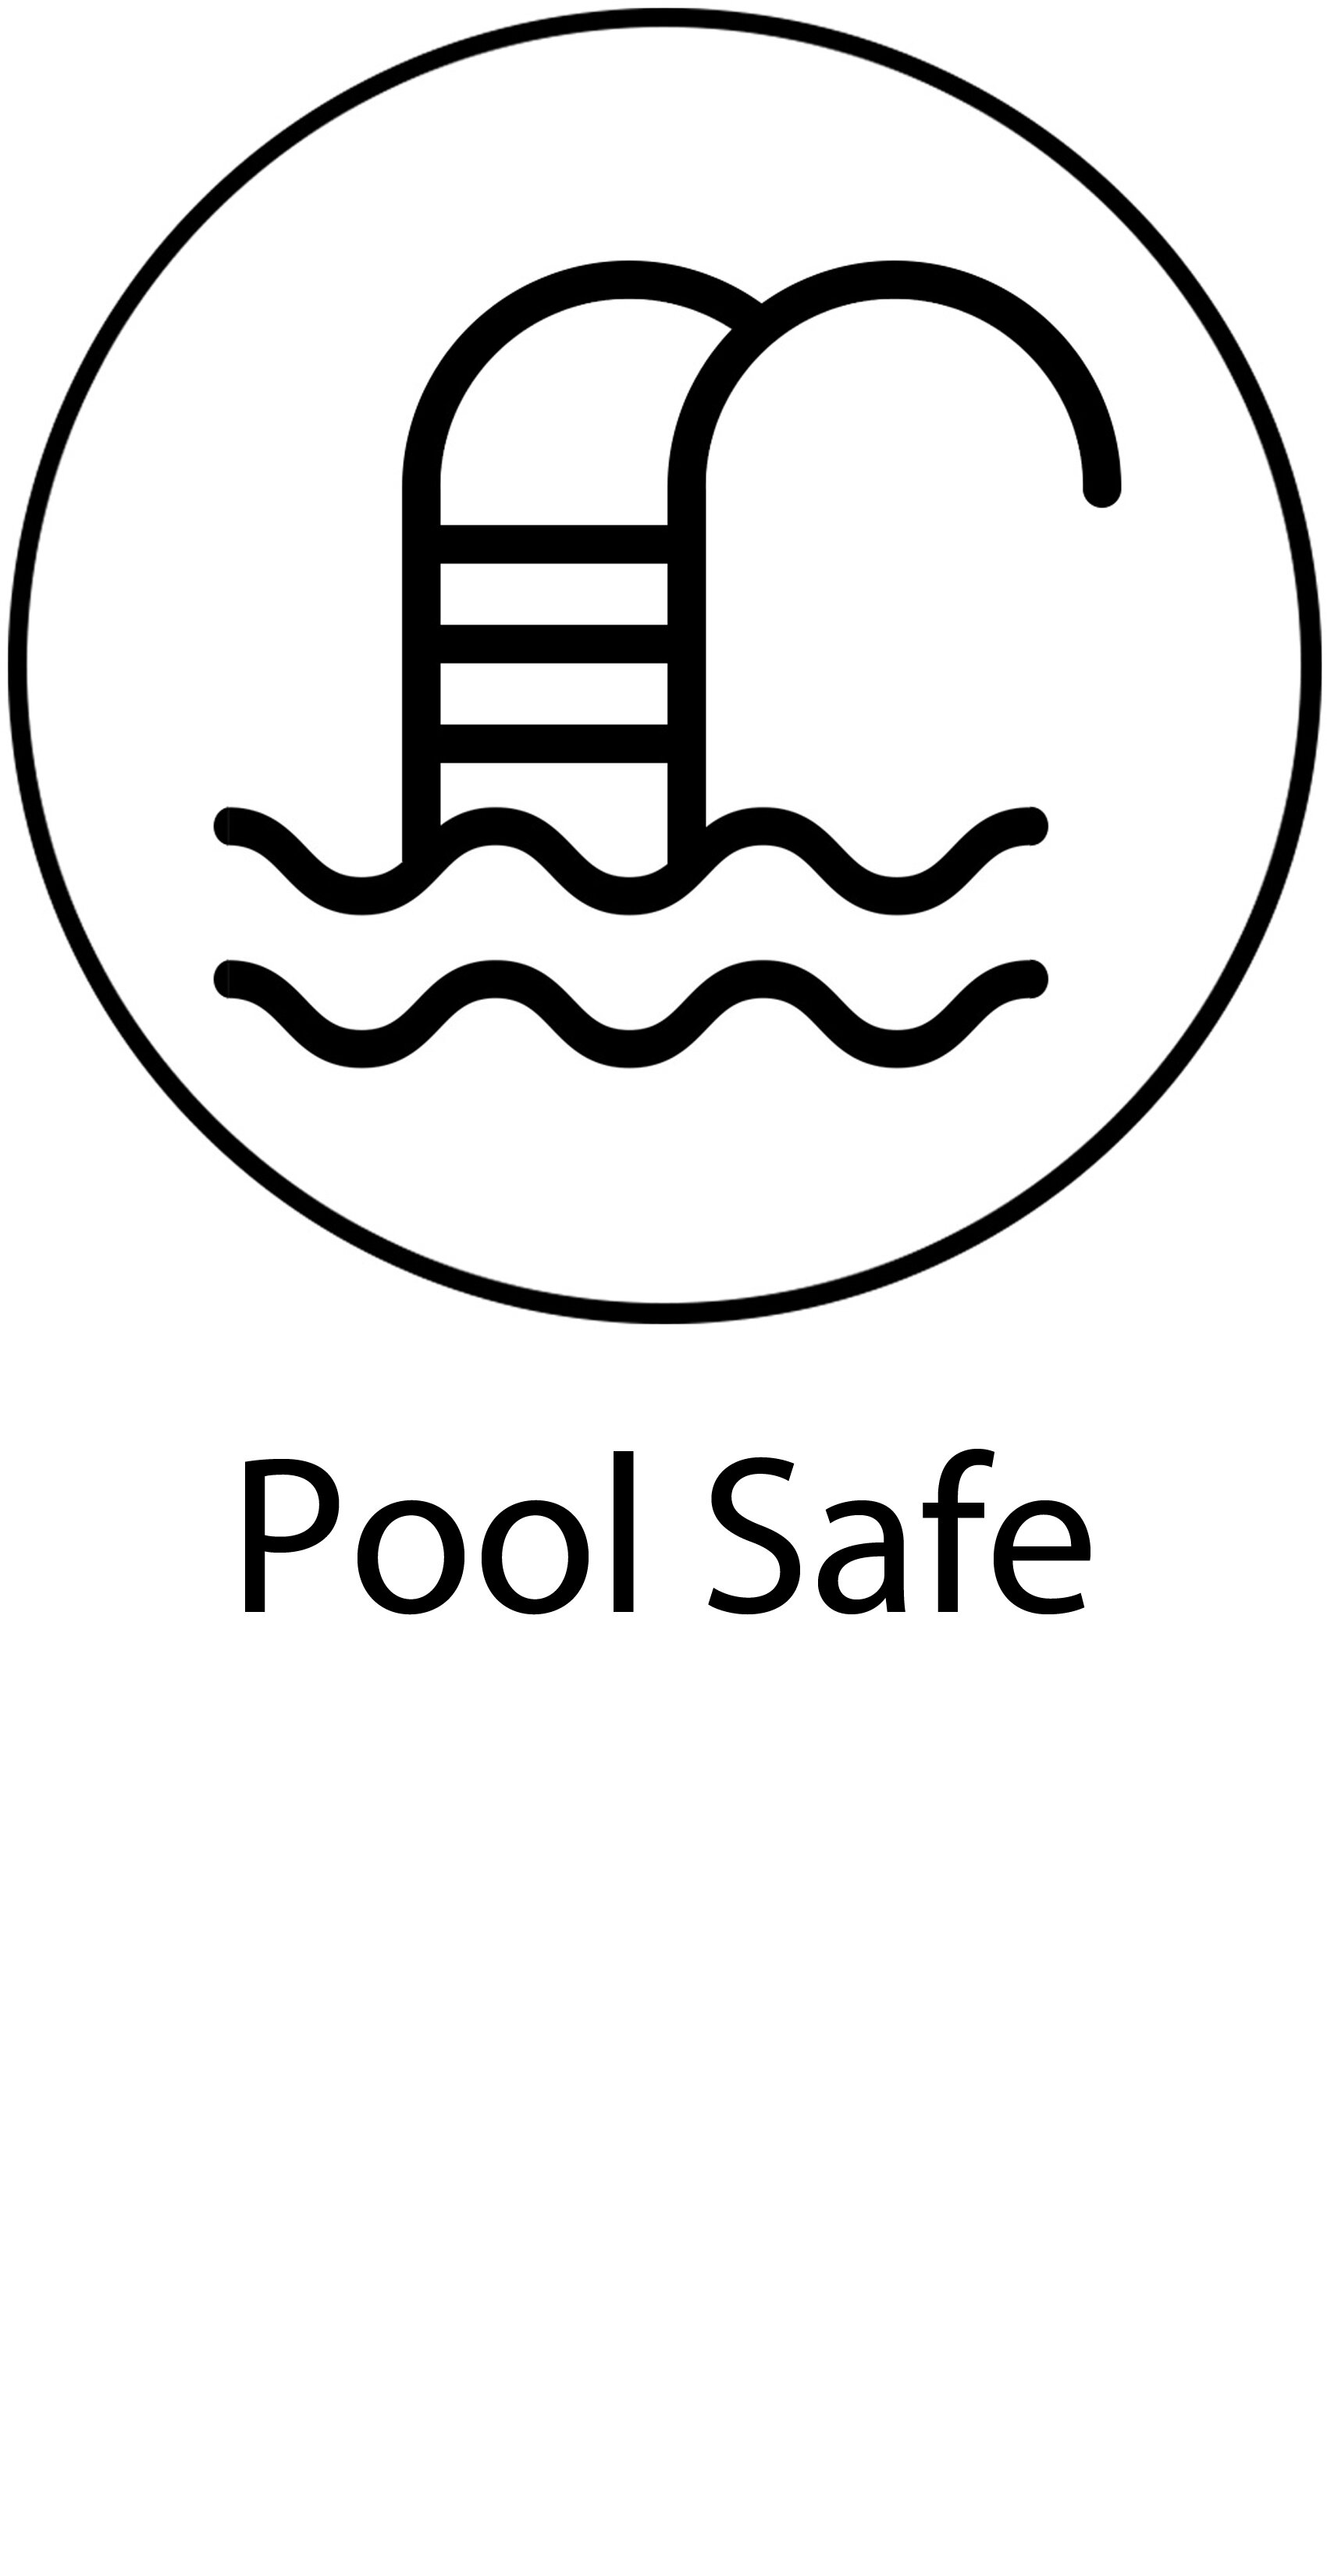 05 Pool Safe.jpg